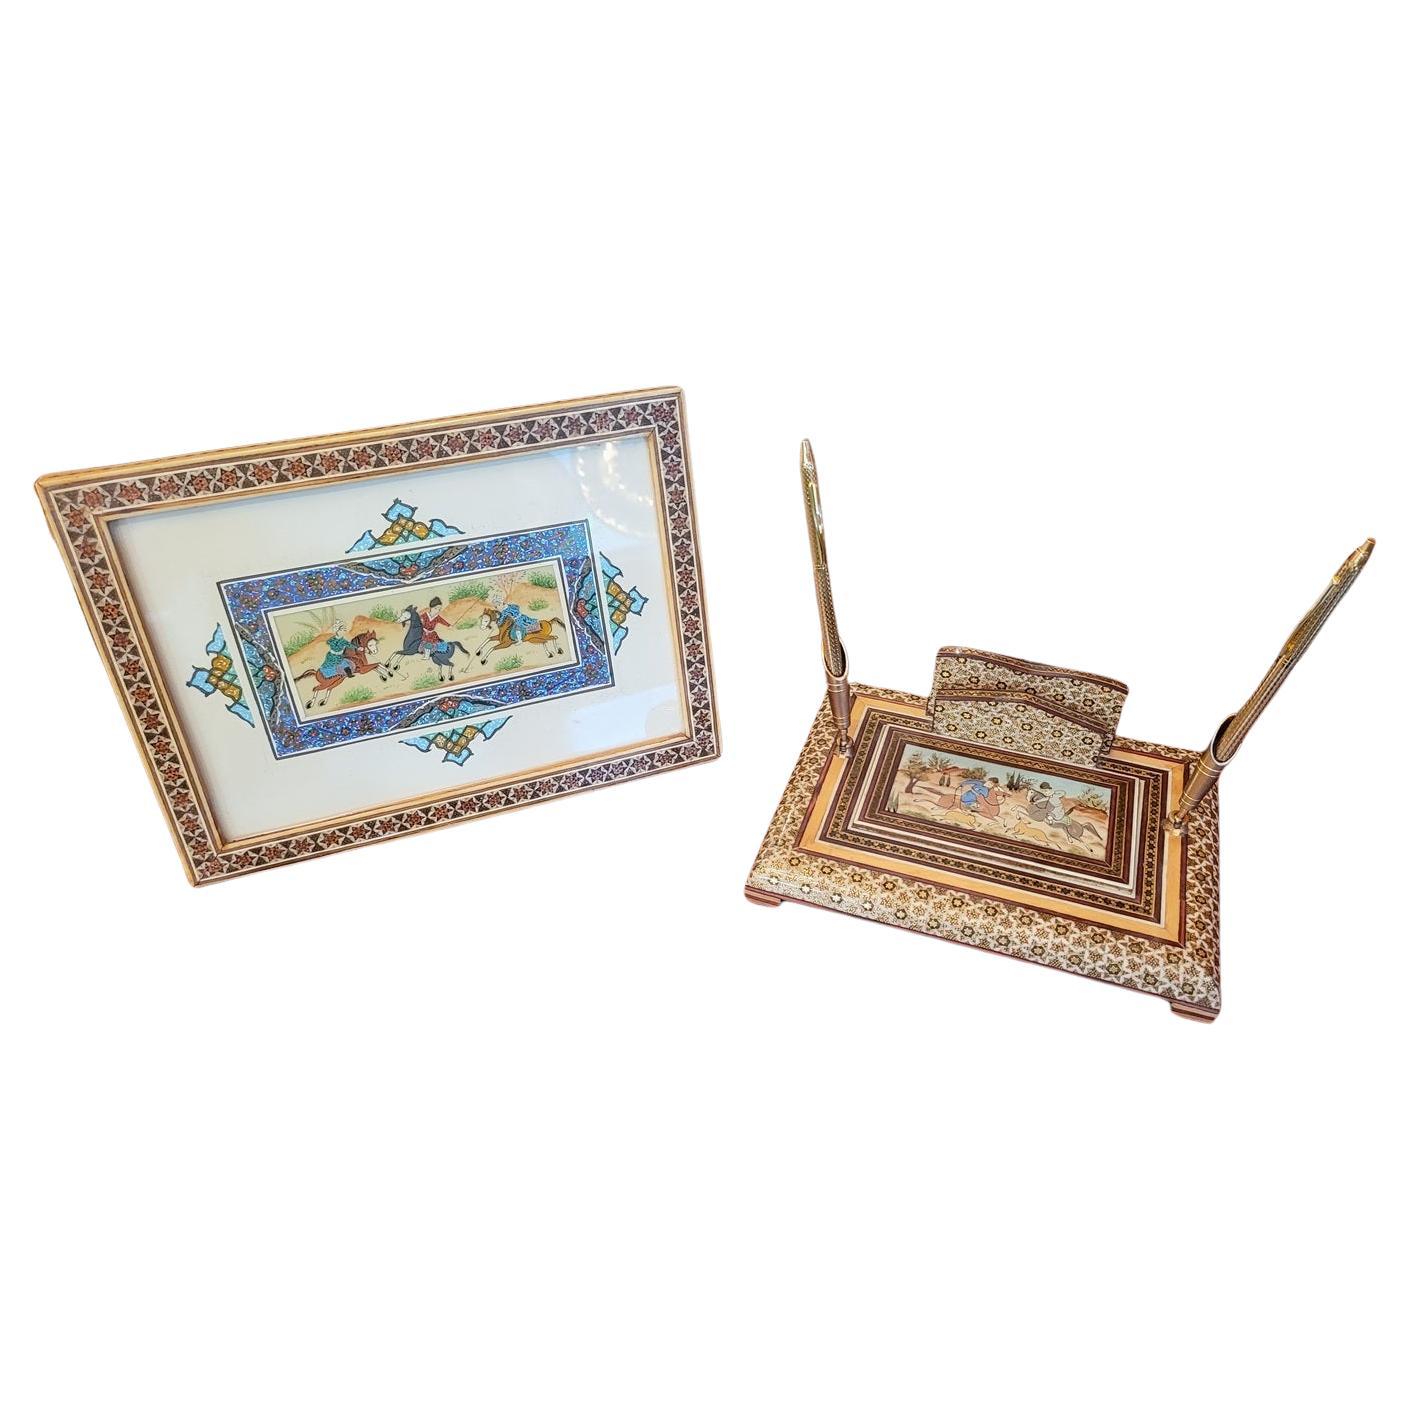 Persian Desk Set with Khatam Mosaic For Sale